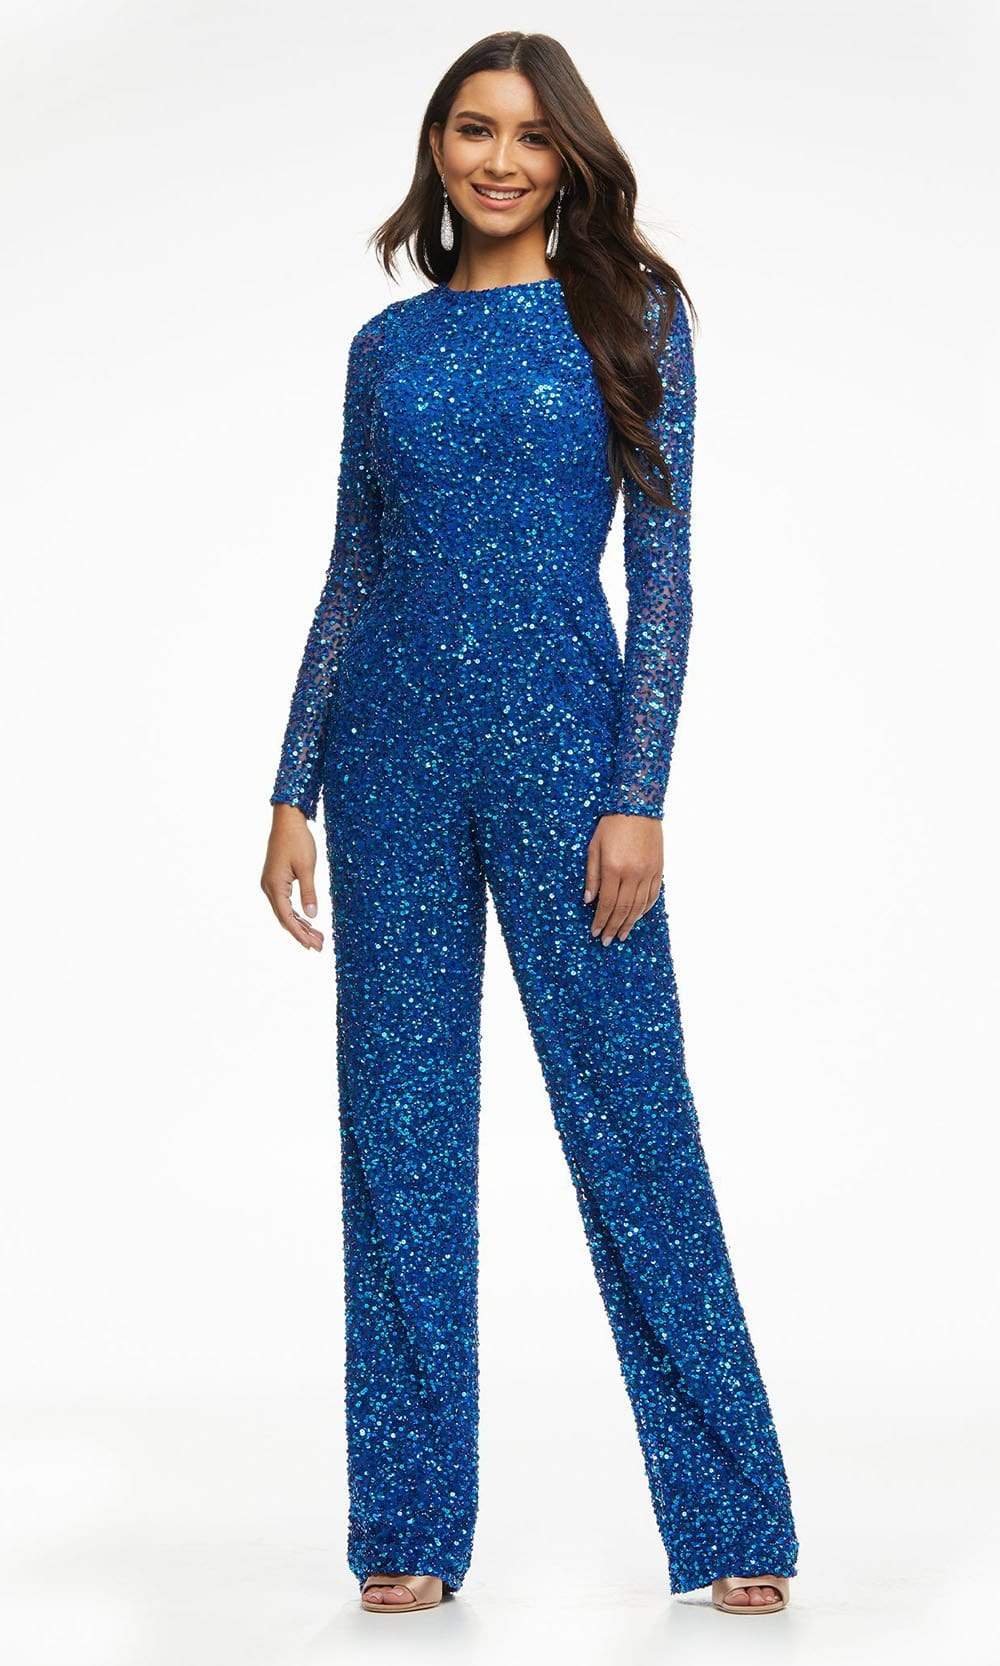 Ashley Lauren - 11079 Fully Beaded Sheer Long Sleeve Jumpsuit Evening Dresses 0 / Royal/Turquoise